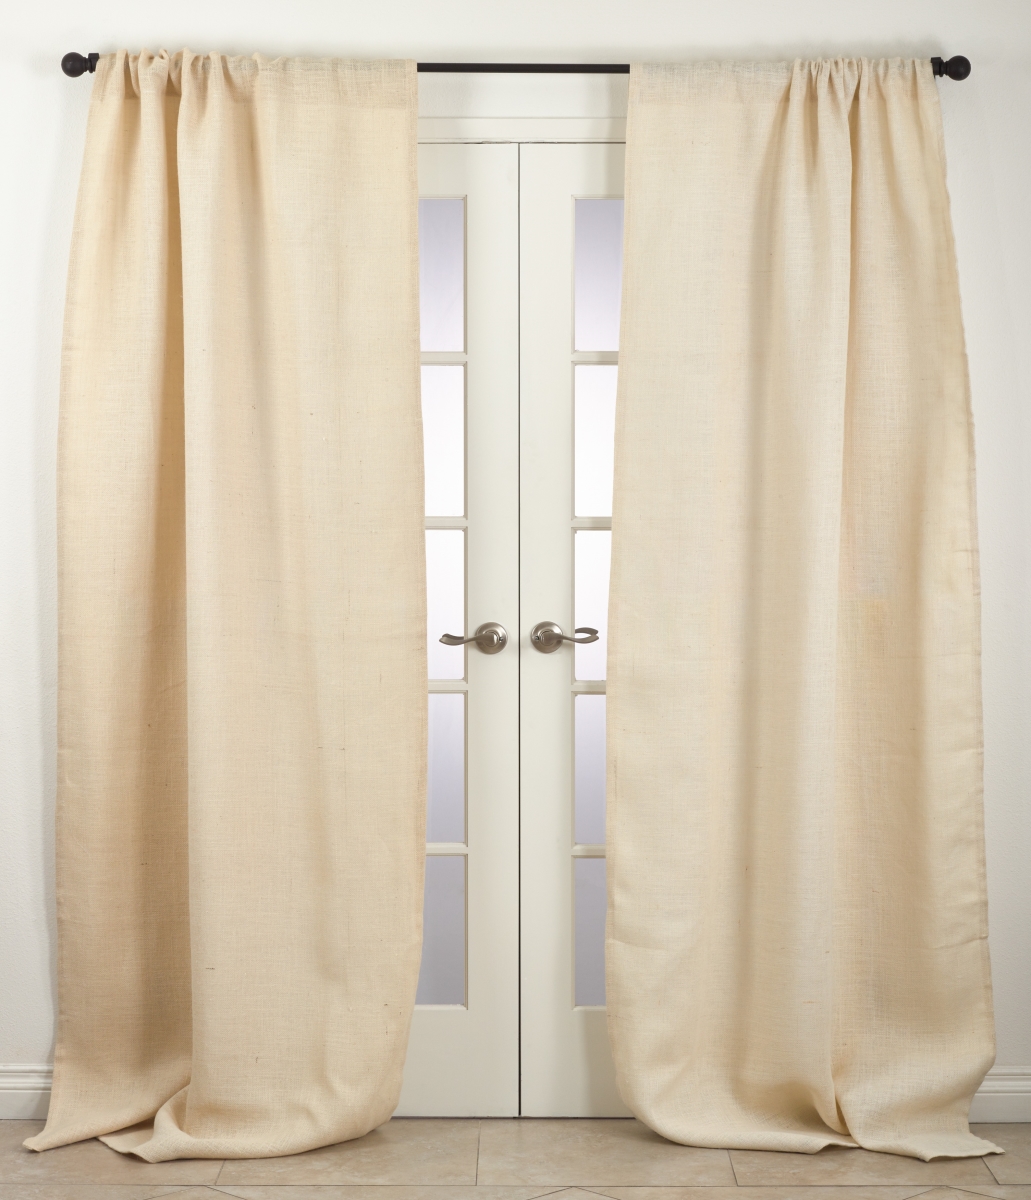 0811.i4284 Burlap Jute Rustic Chic Lined Curtain Panel - Ivory